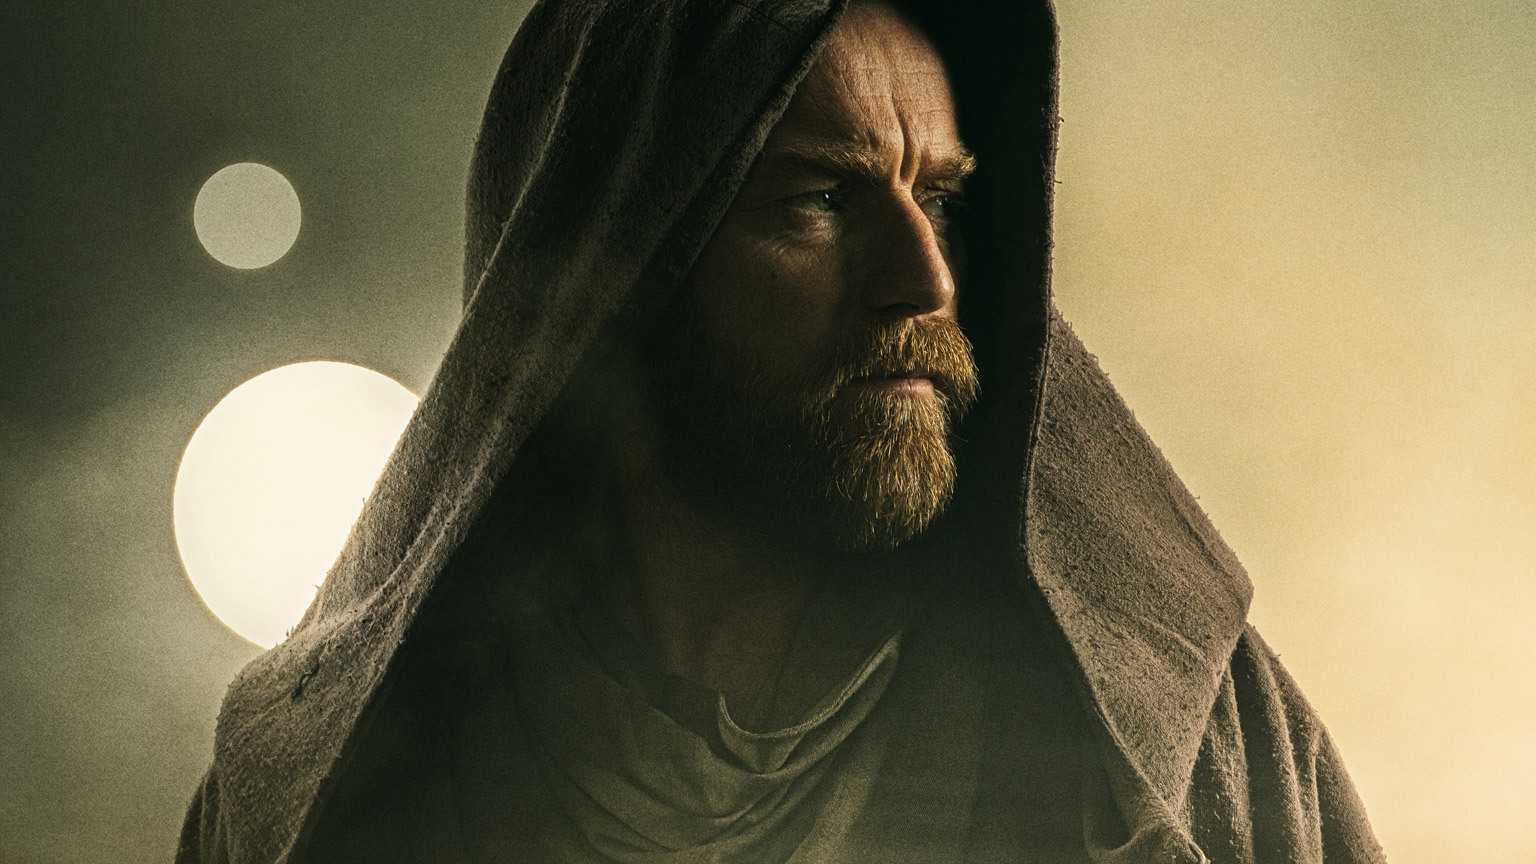 Obi-Wan Kenobi star Ewan McGregor talks about the current status of season 2